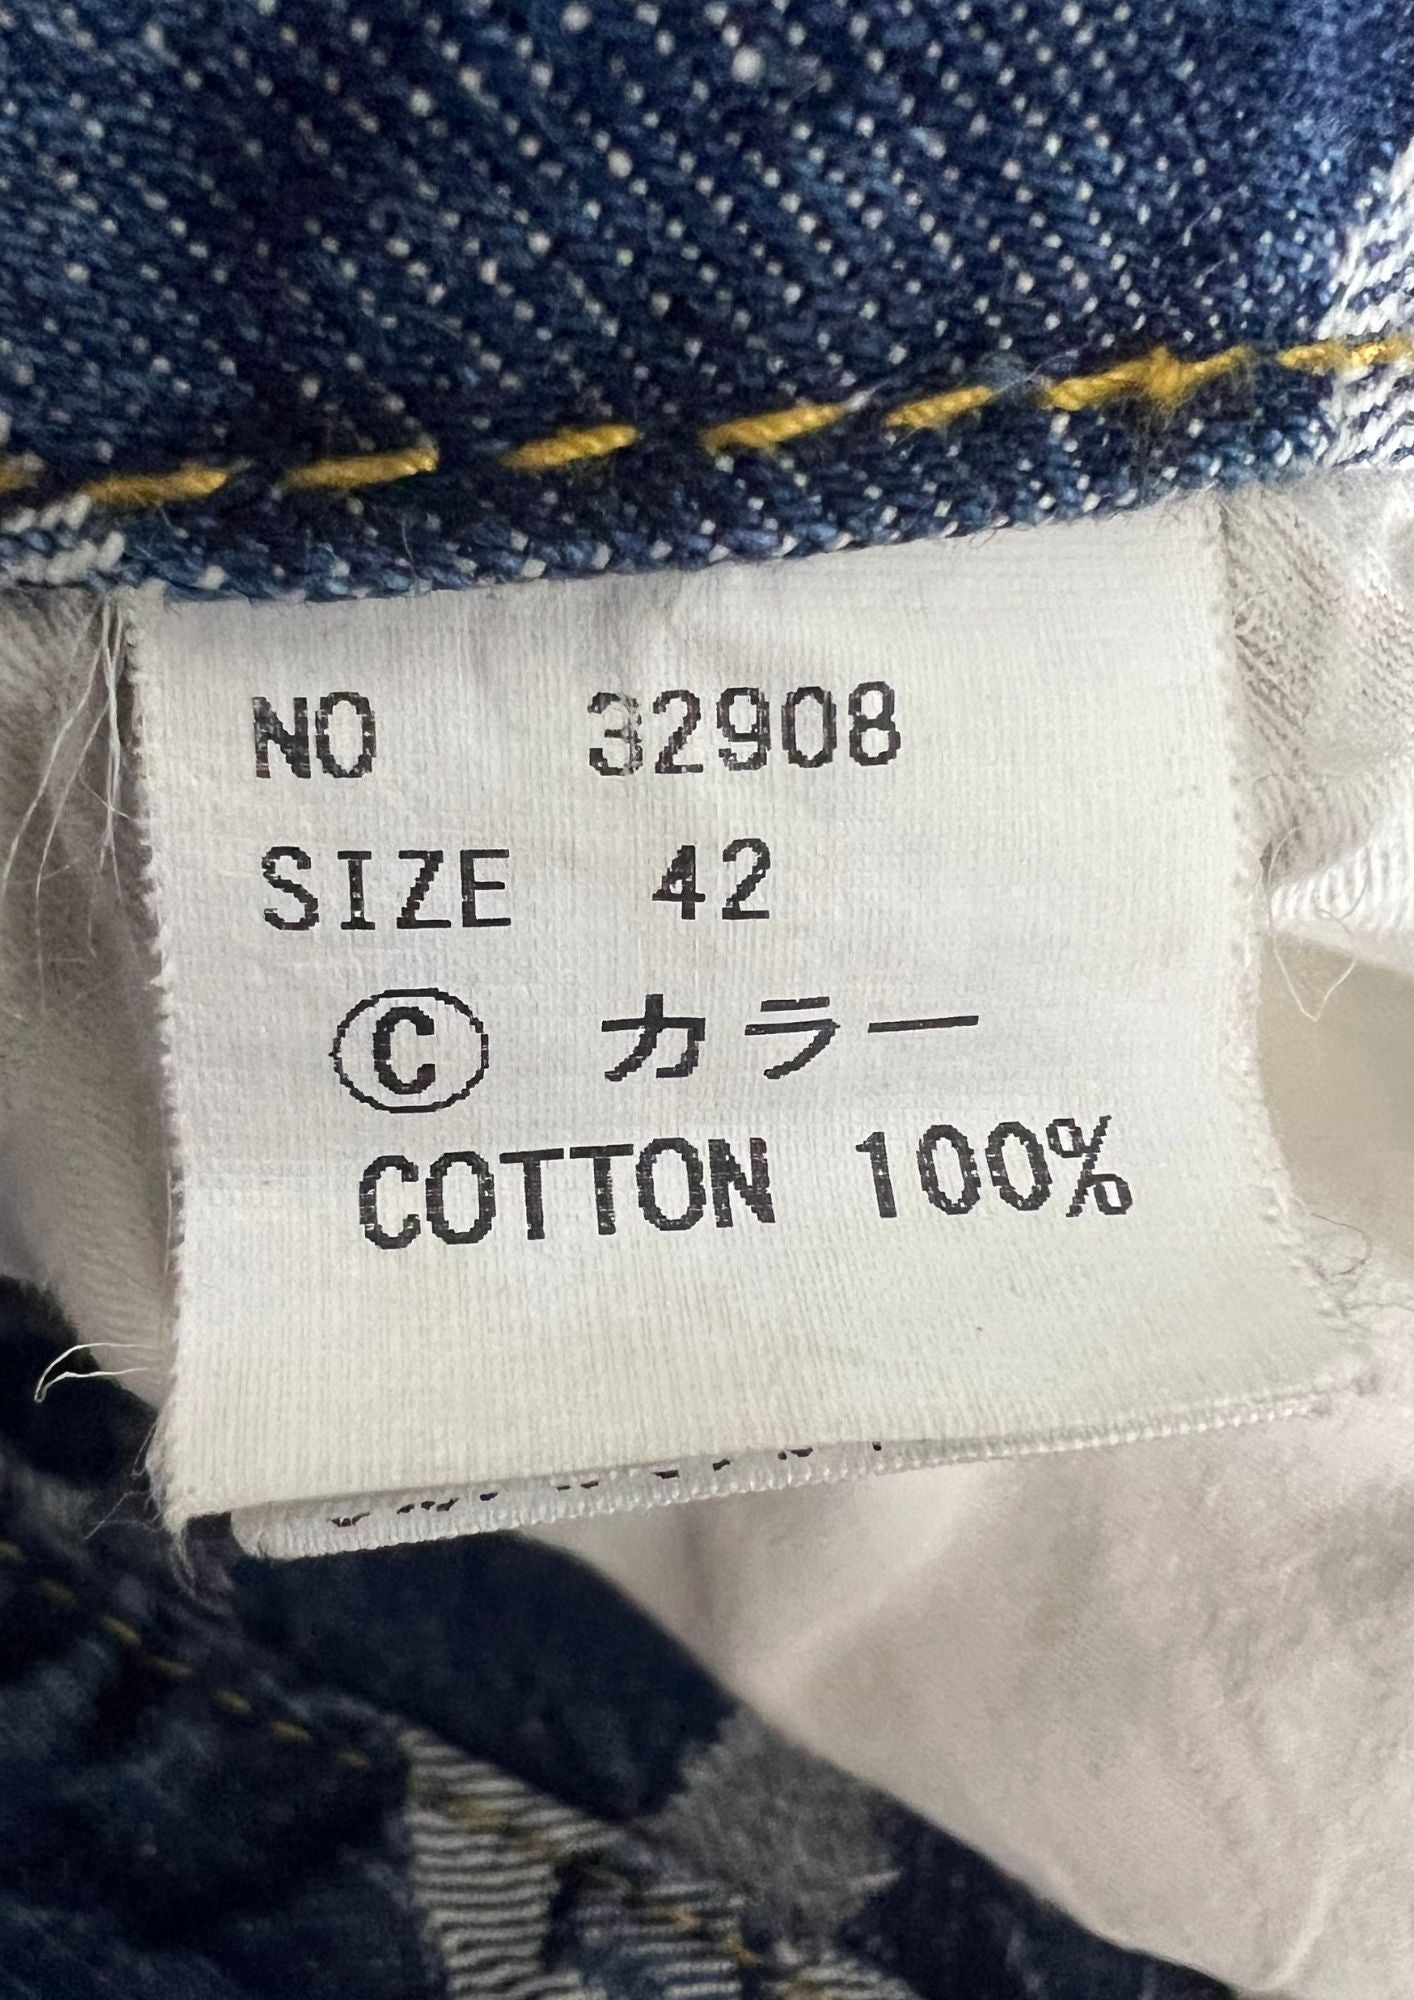 2014 Neon Genesis Evangelion x Nishiki Oriental Brand TYPE 01 Angels Japanese Pattern Embroidered Jeans